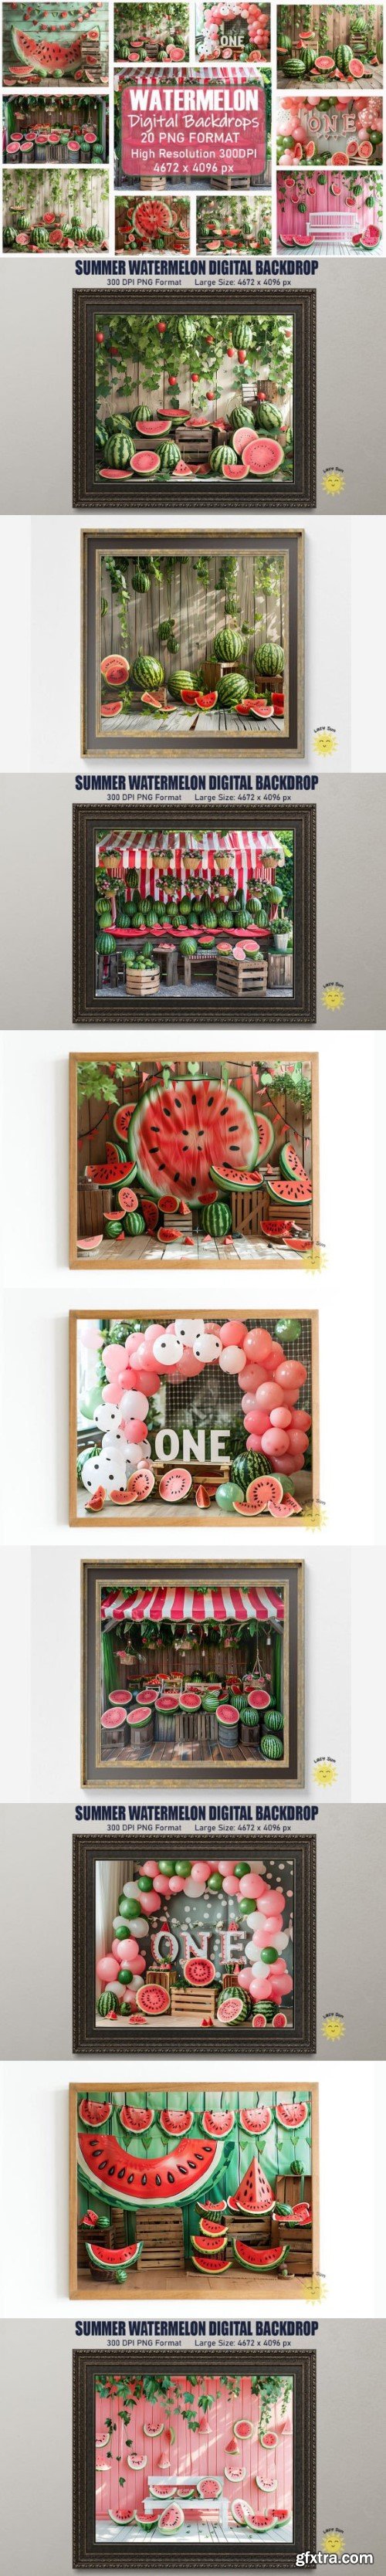 Summer Watermelon Digital Backdrop